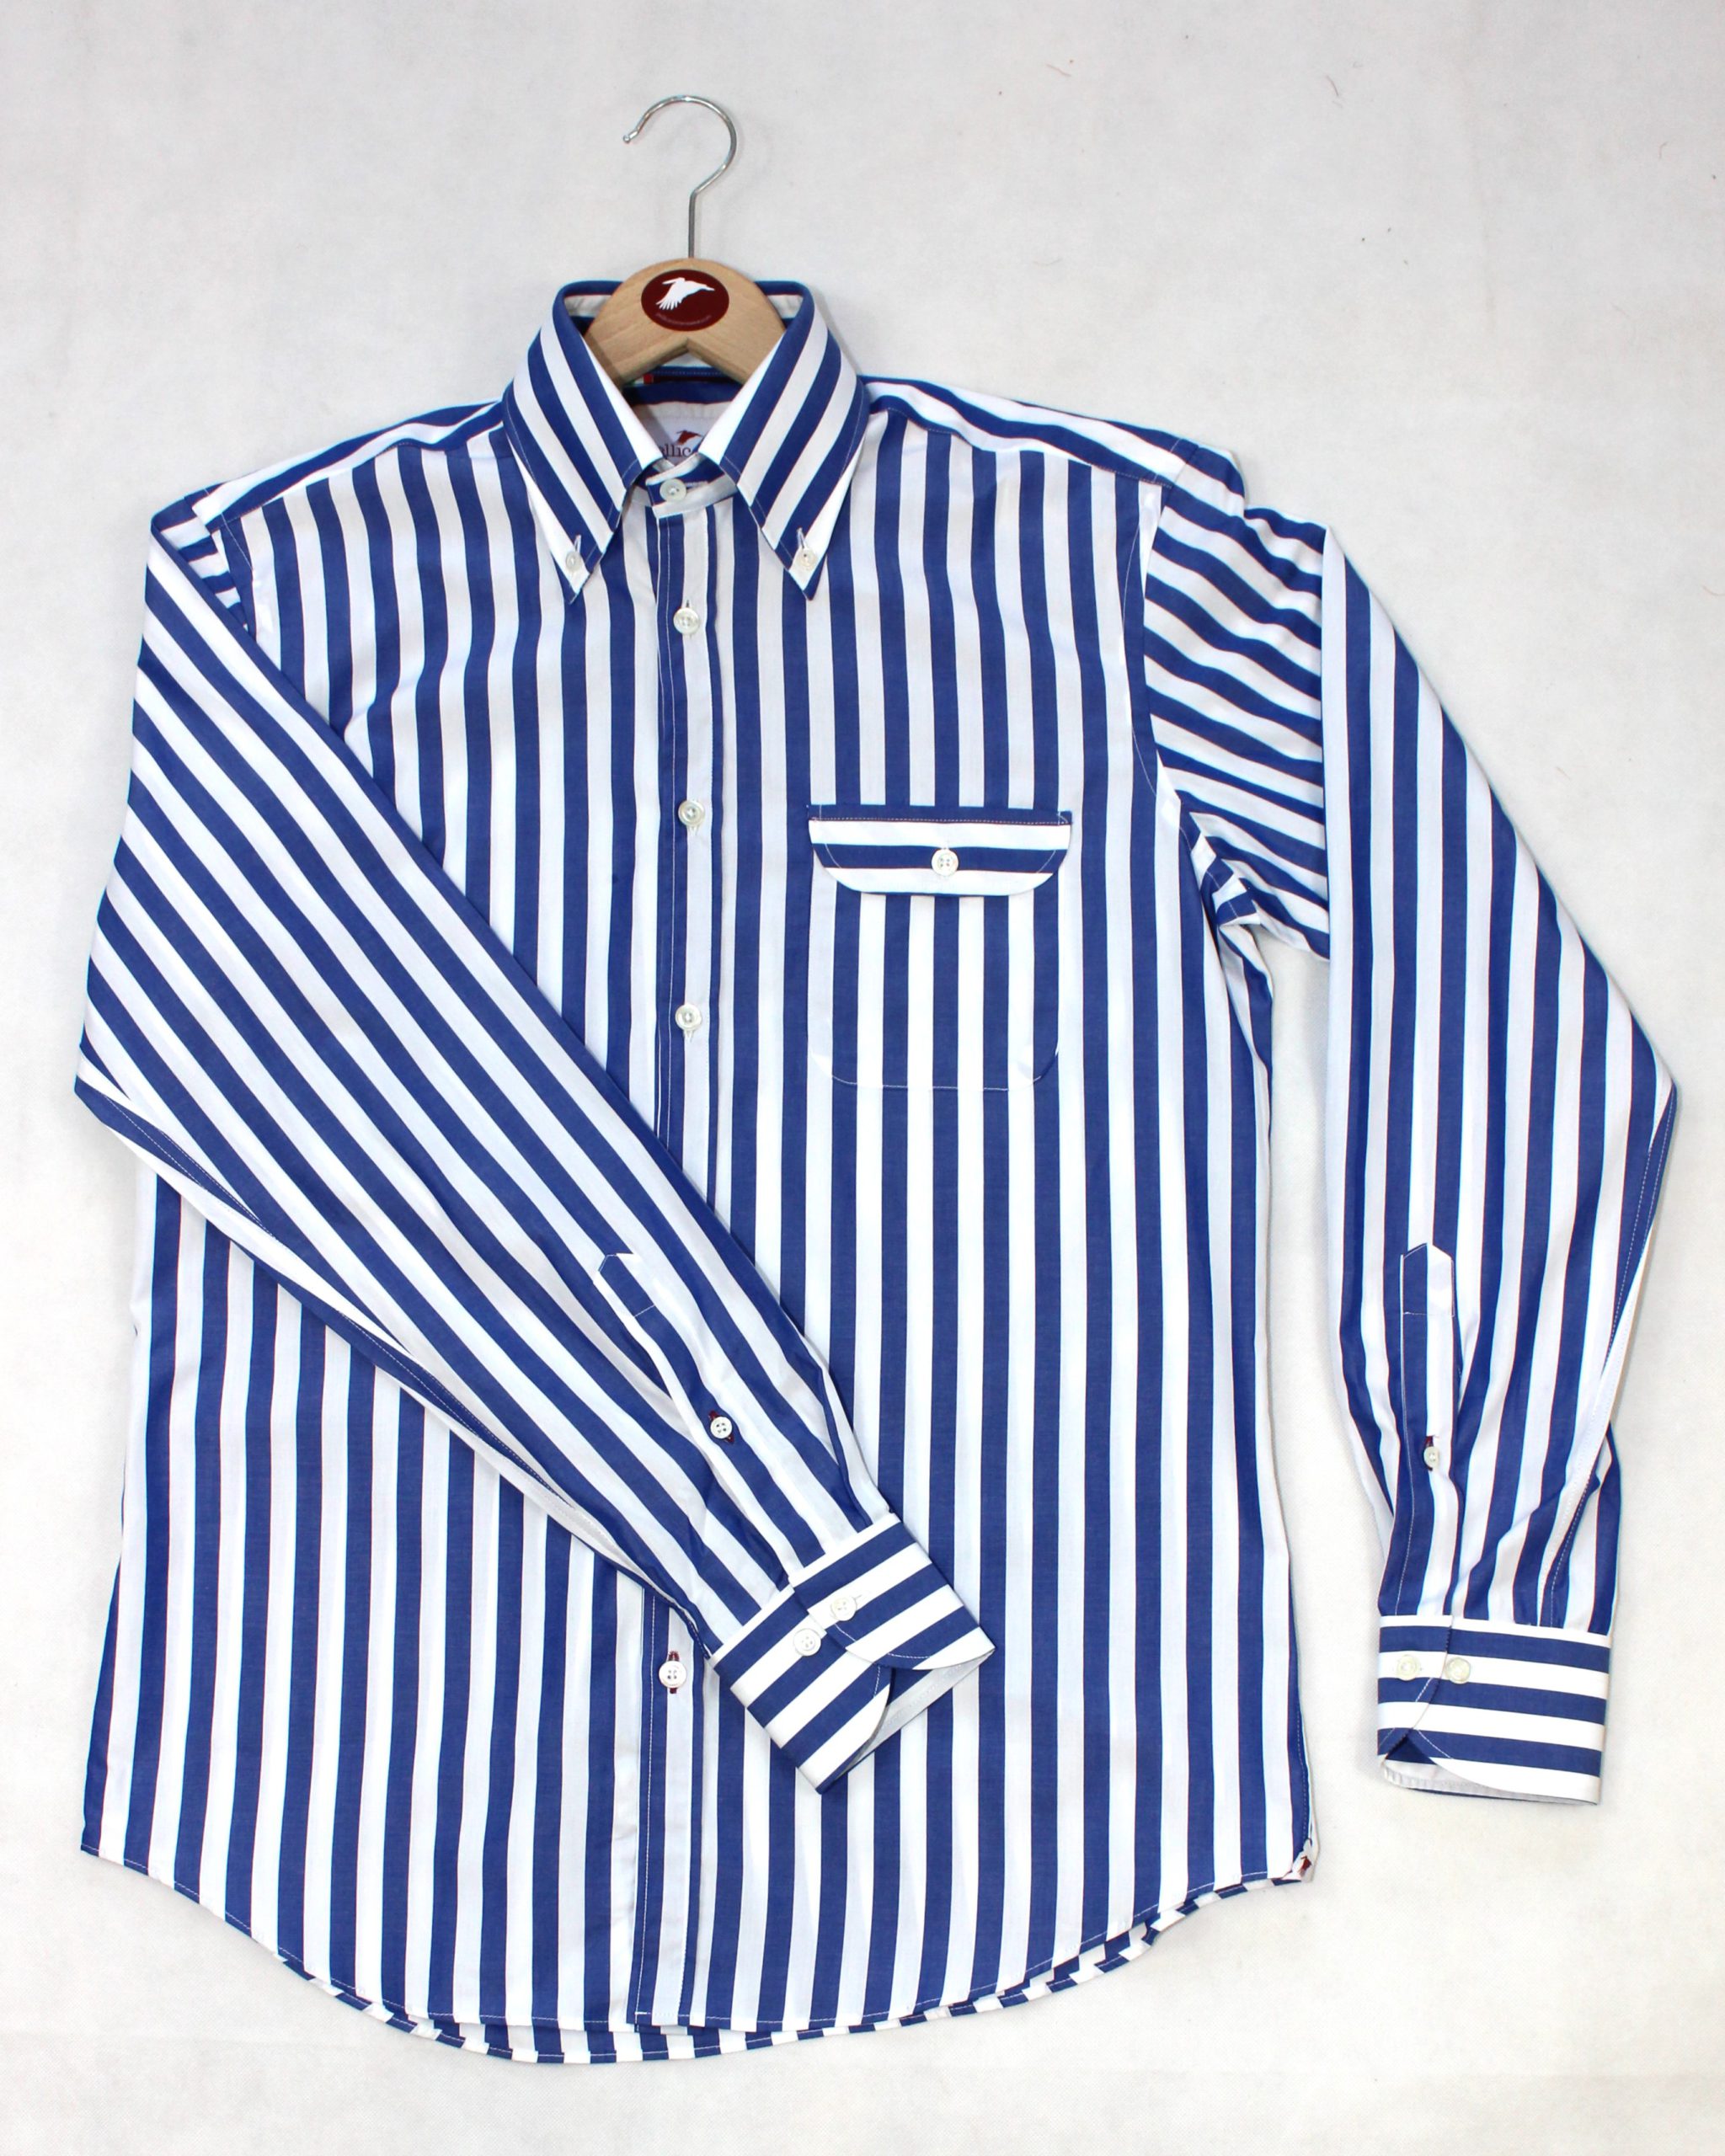 A Men's Bengal Stripe Shirt in Blue & White - Pellicano Menswear